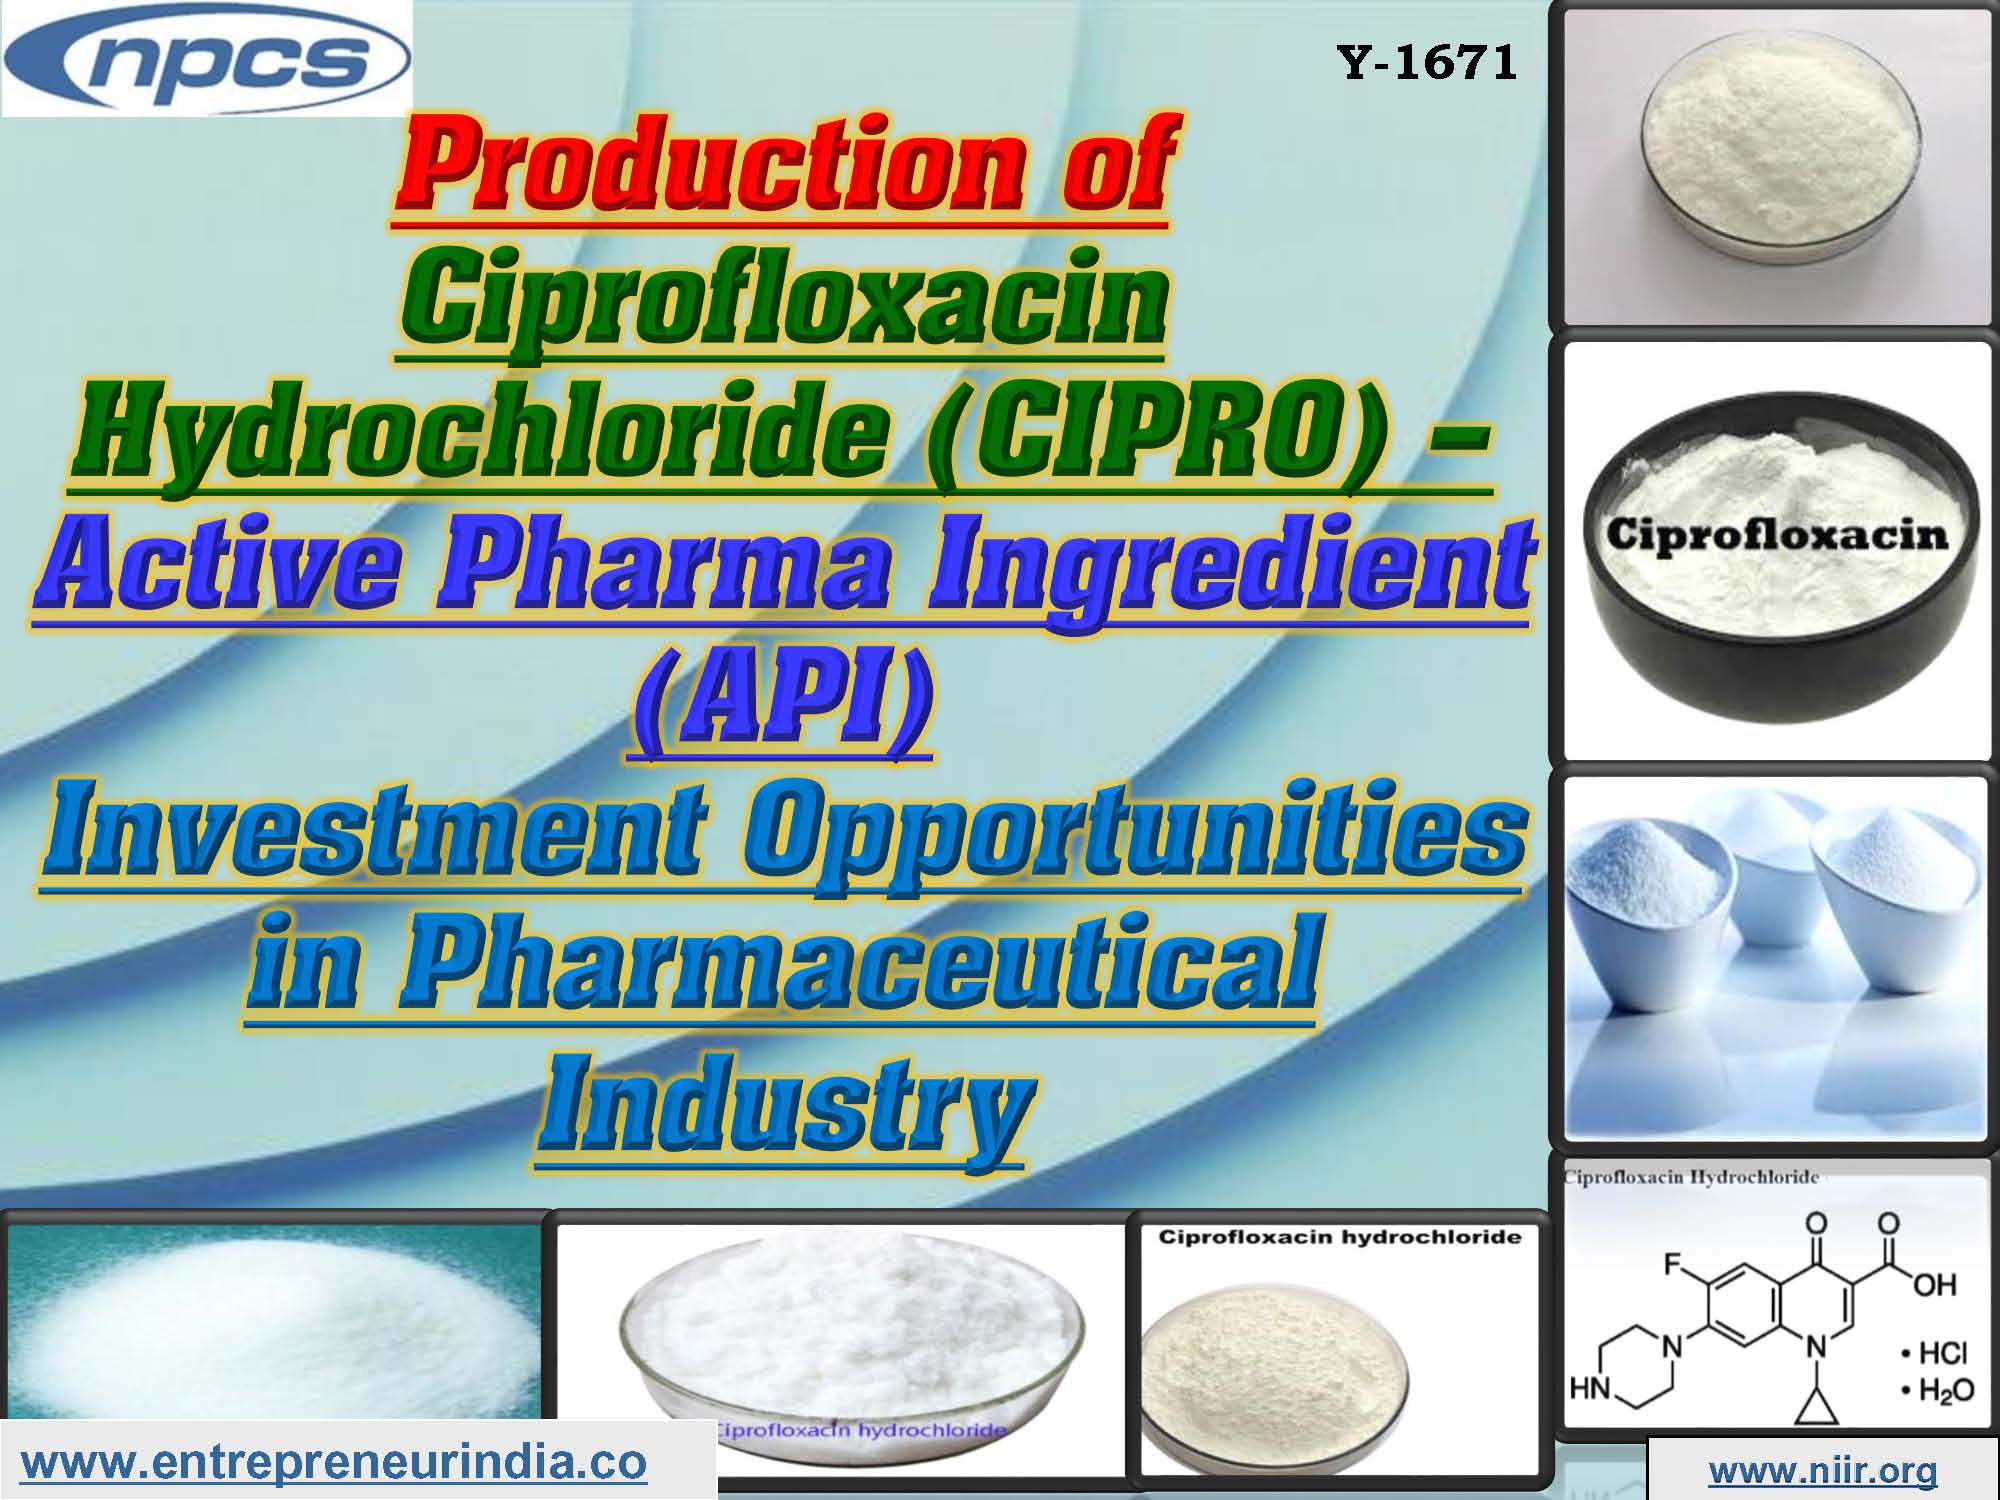 Production of Ciprofloxacin Hydrochloride (CIPRO) - Active Pharma Ingredient